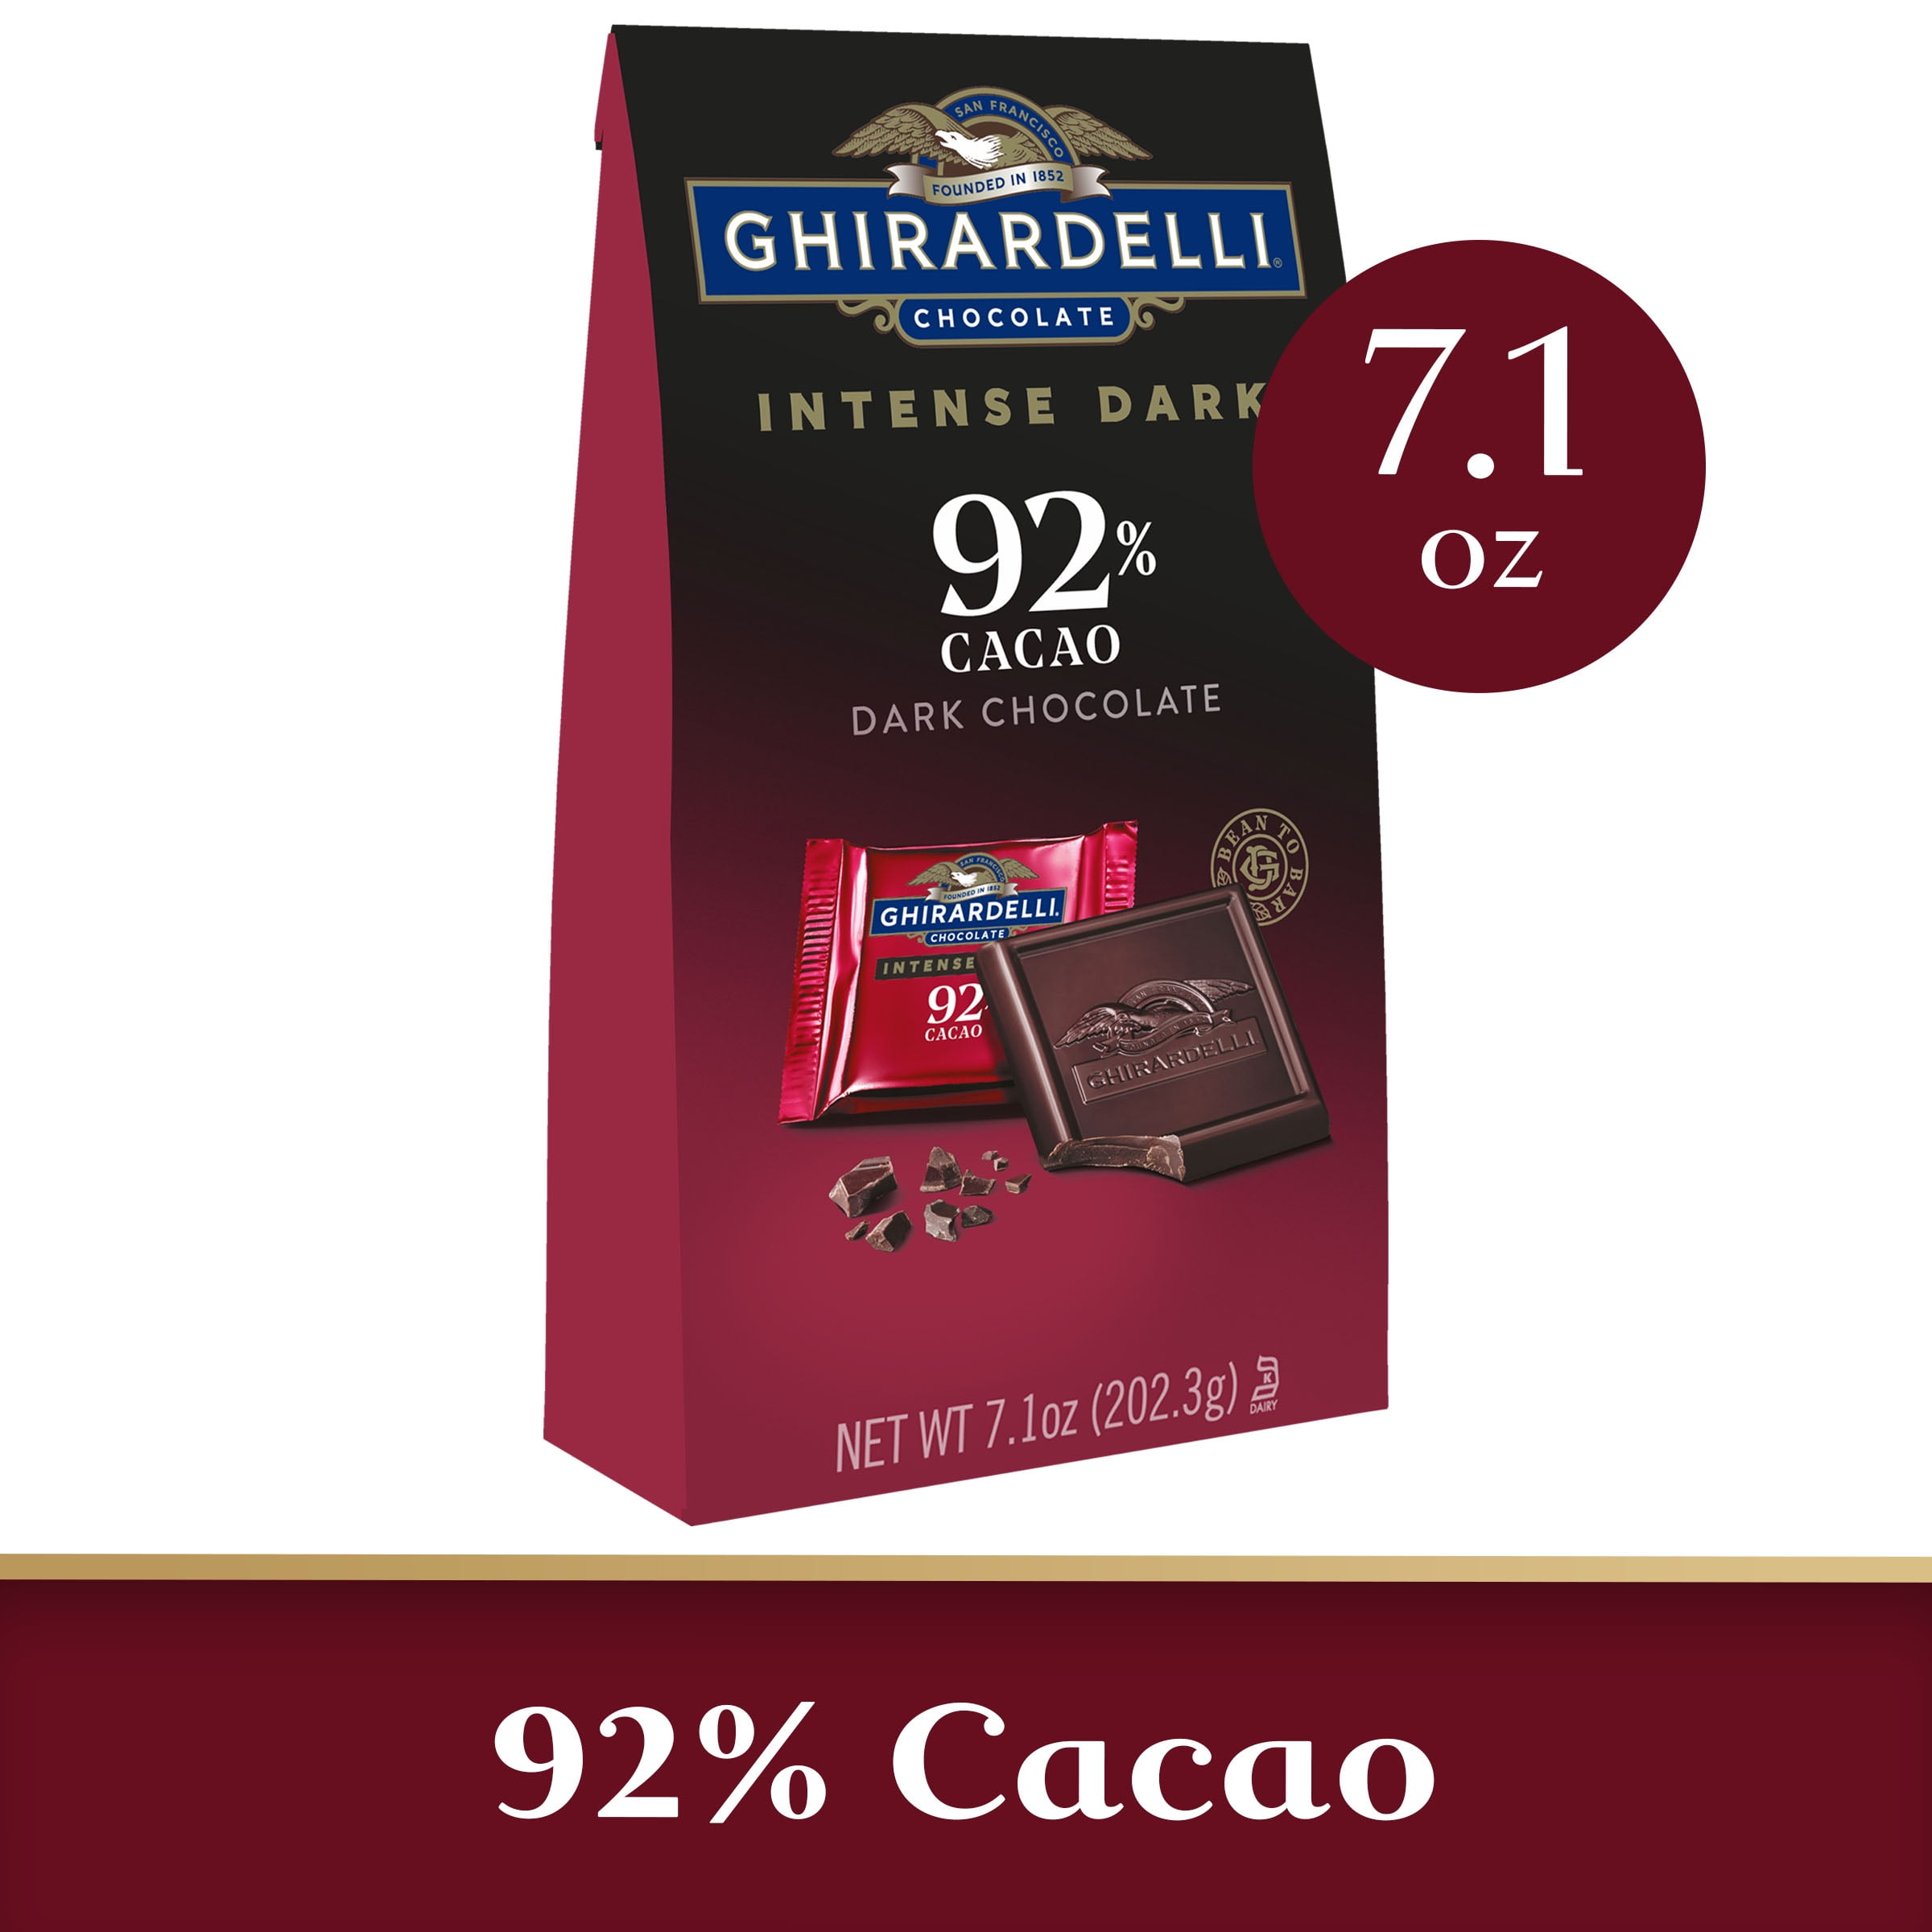 GHIRARDELLI Intense Dark Chocolate Squares, 92% Cacao, 7.1 Oz Bag